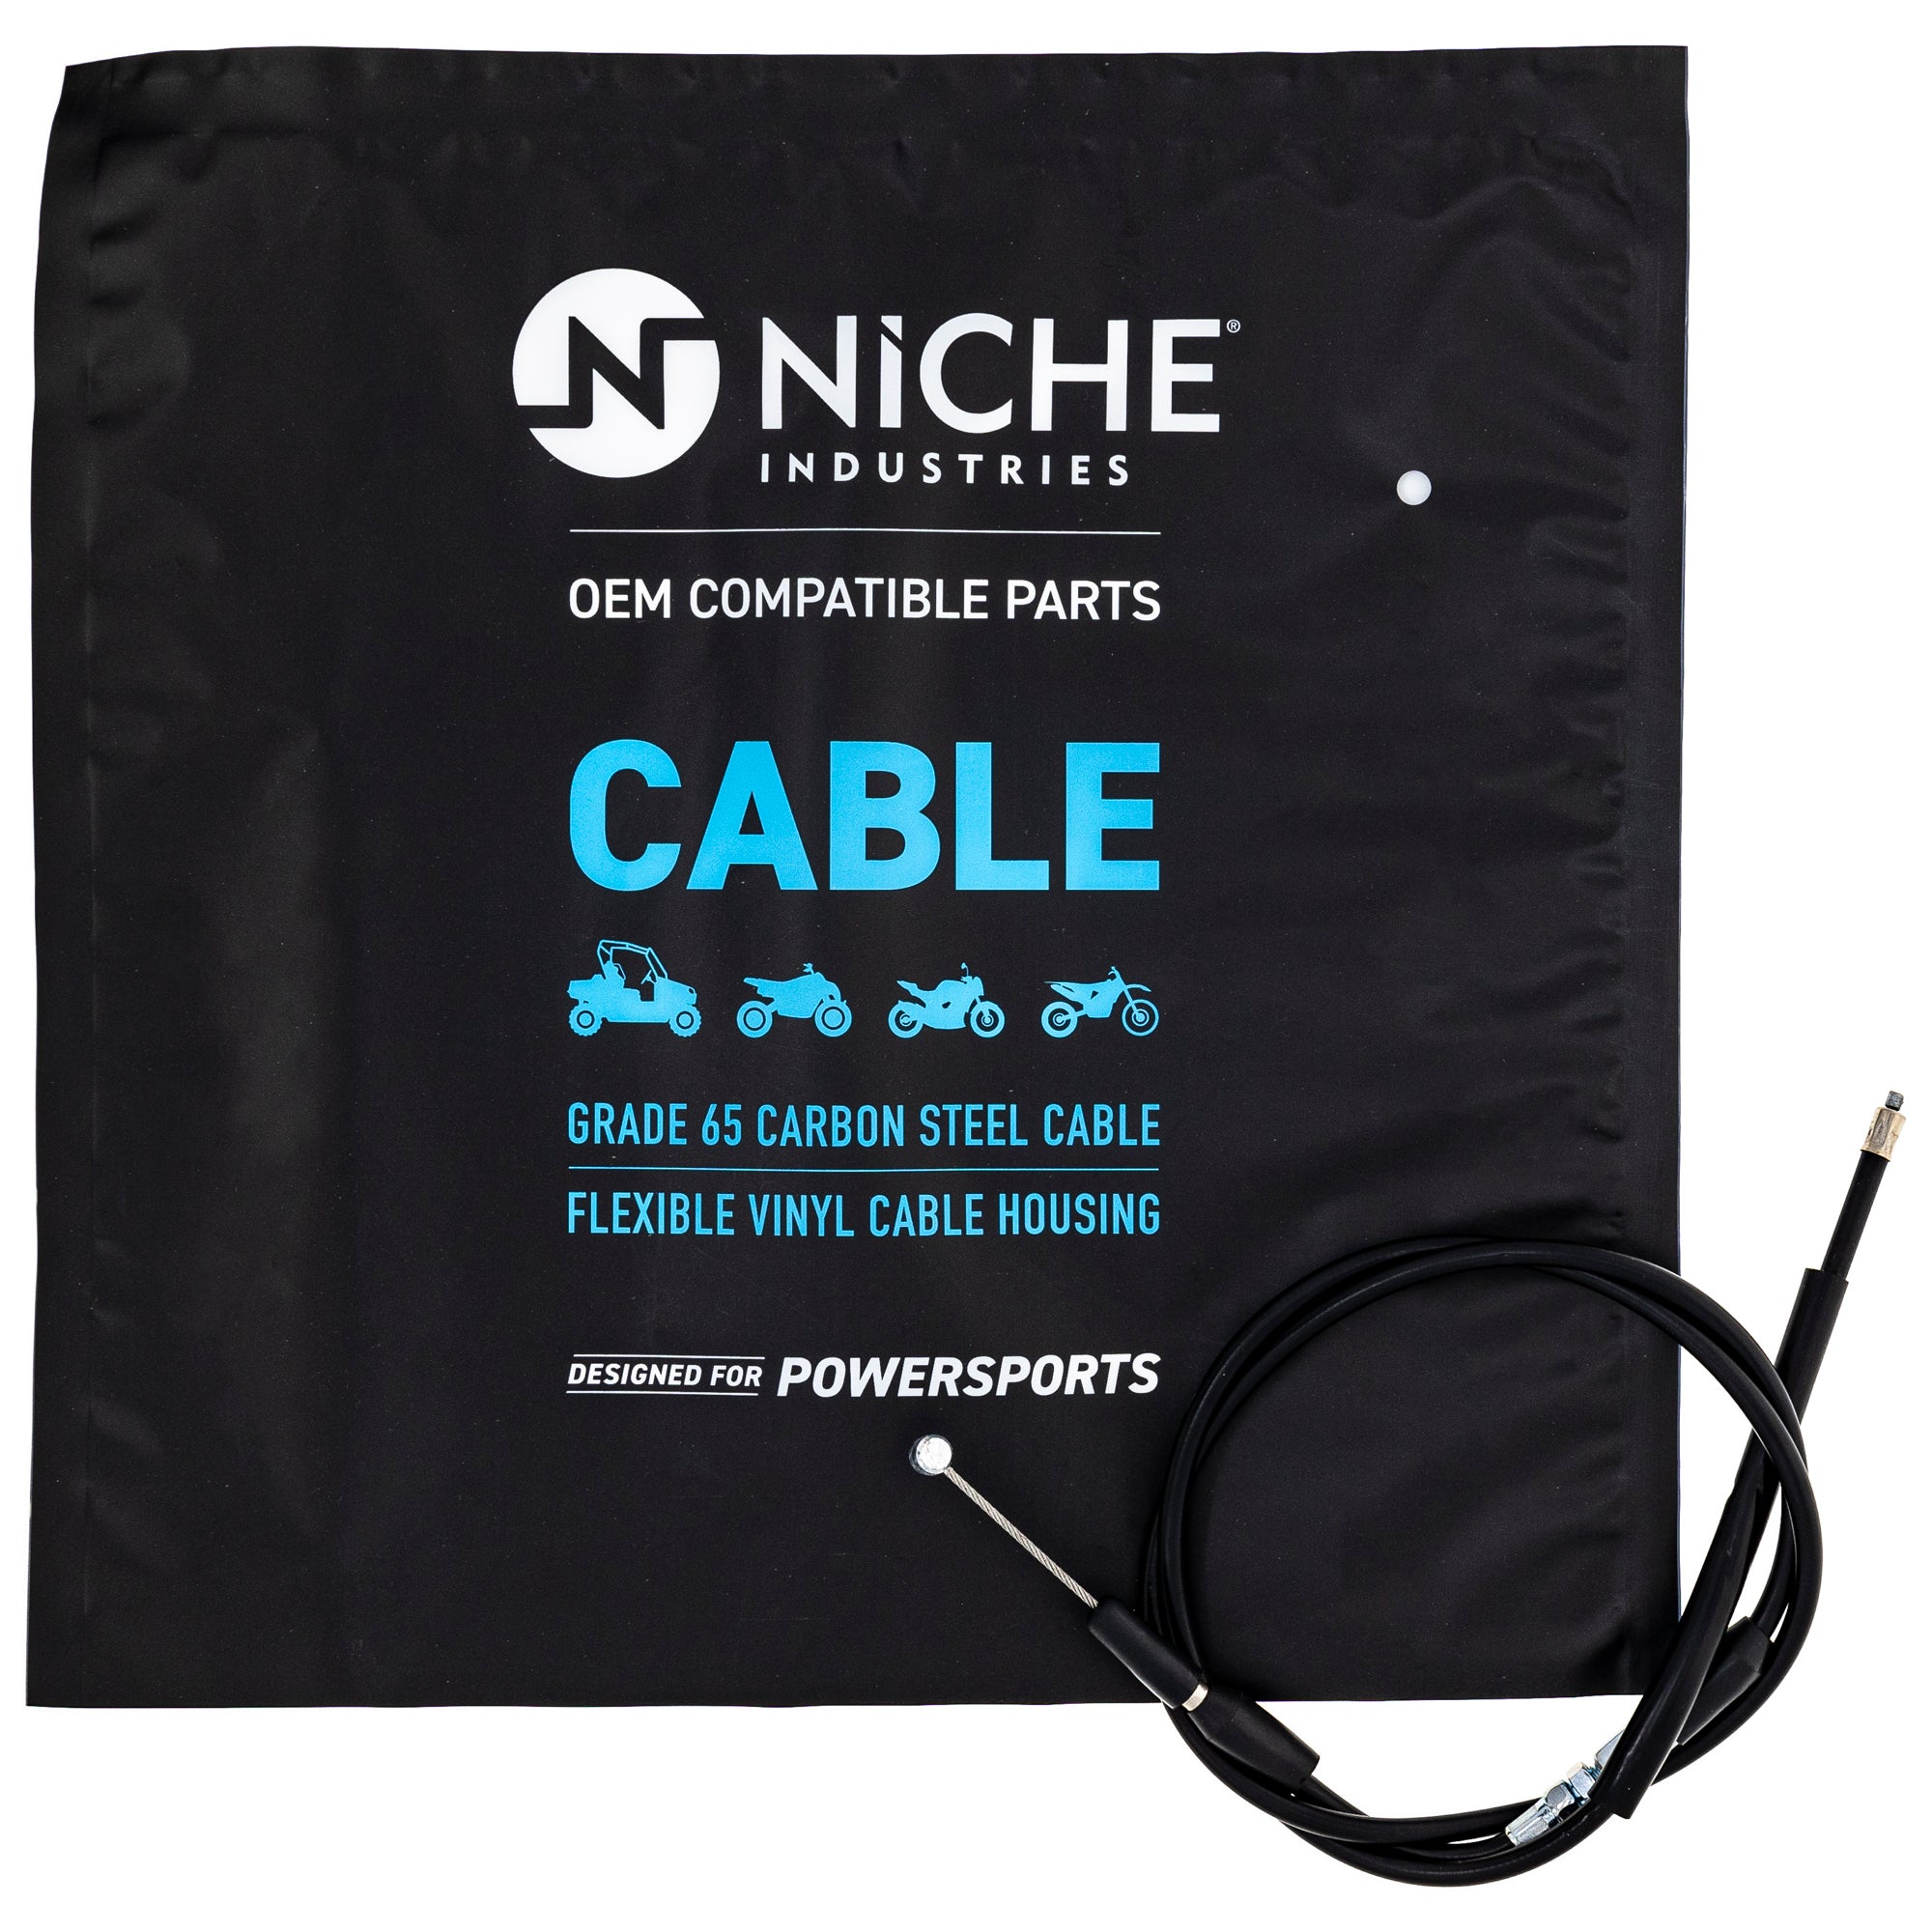 NICHE 519-CCB2342L Hot Start Cable for zOTHER KX450F KX250F KLX450R